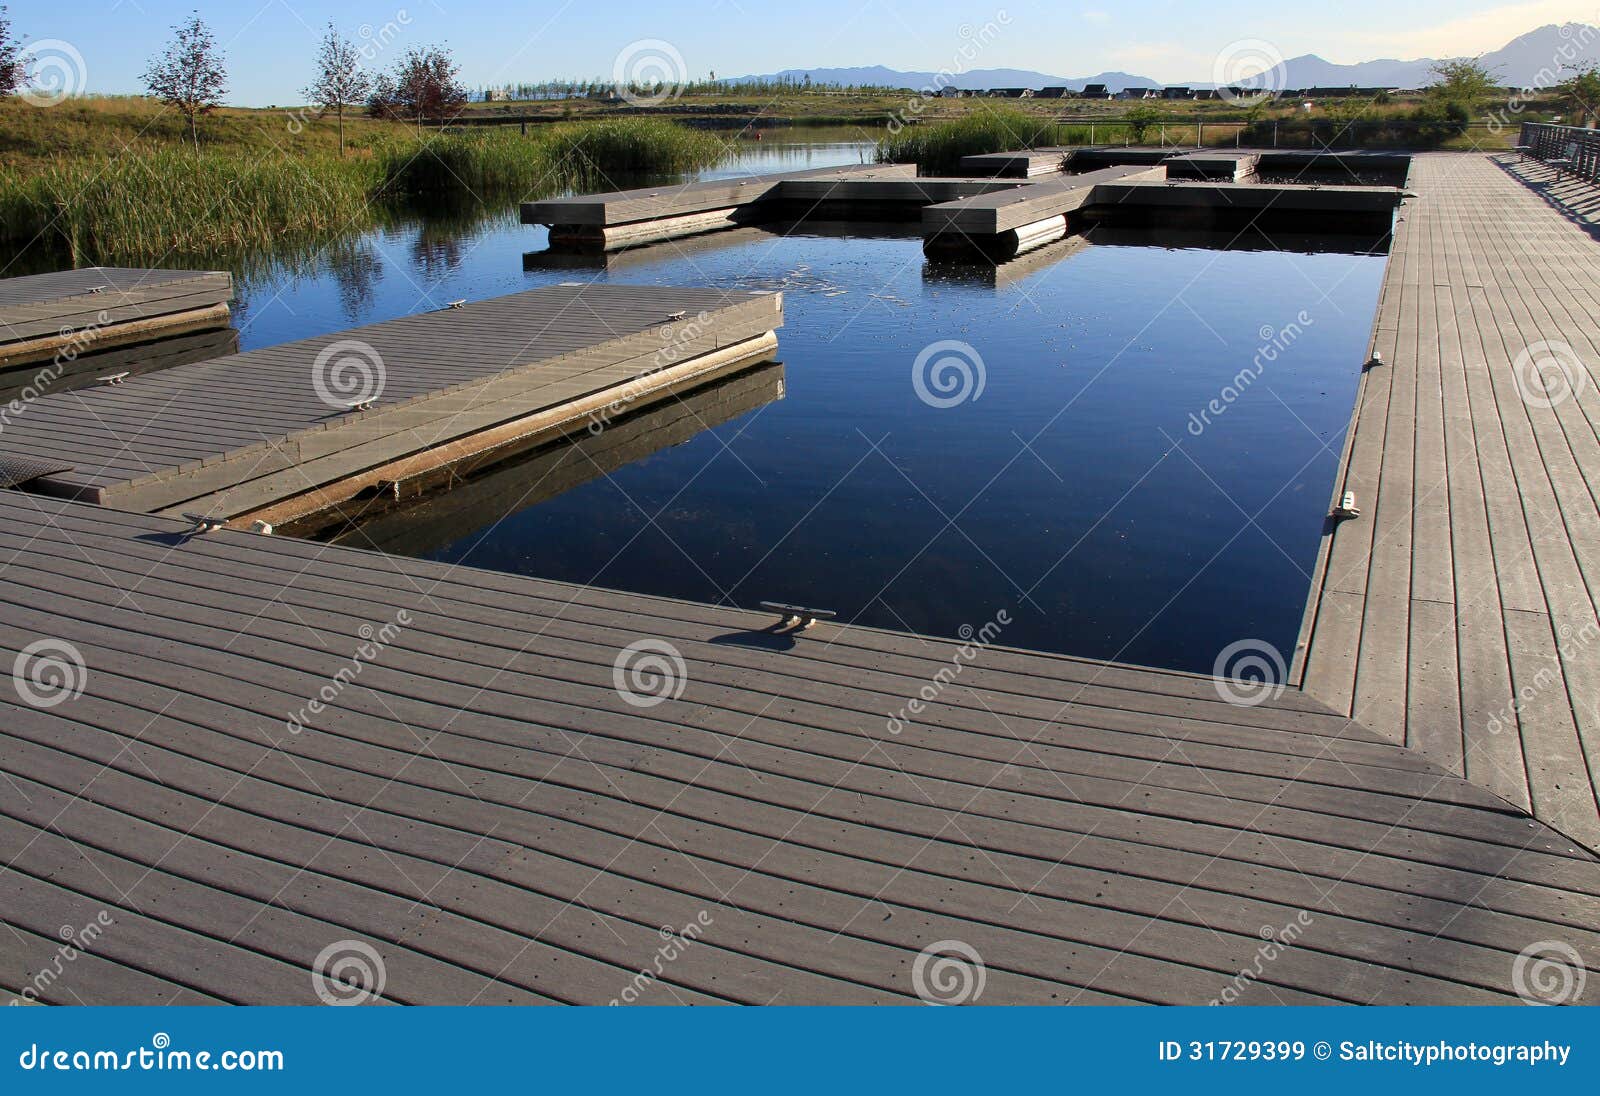 clipart boat dock - photo #41